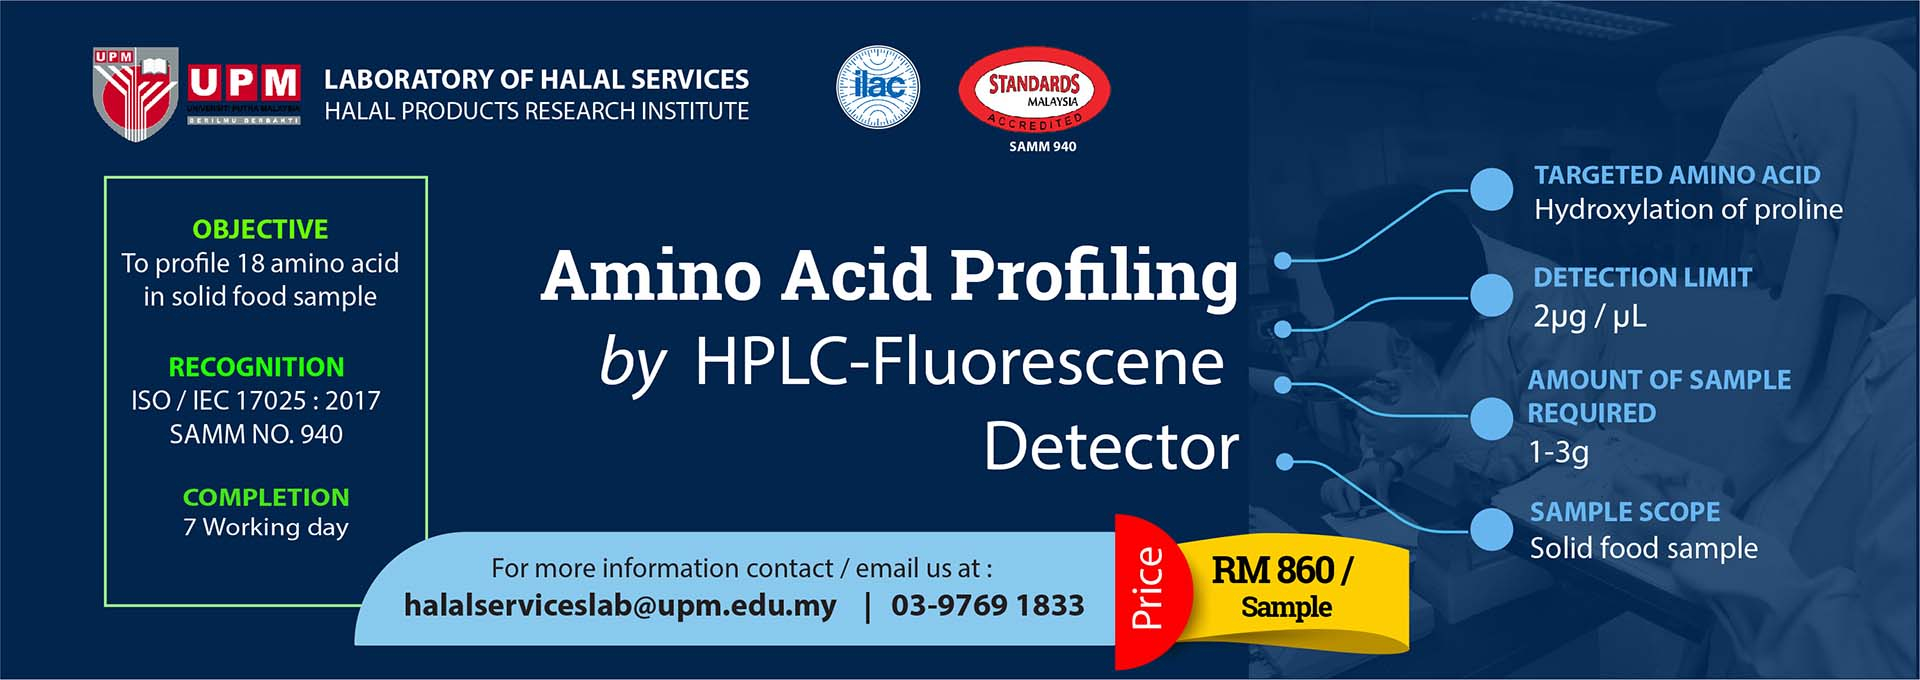 Amino Acid Profiling